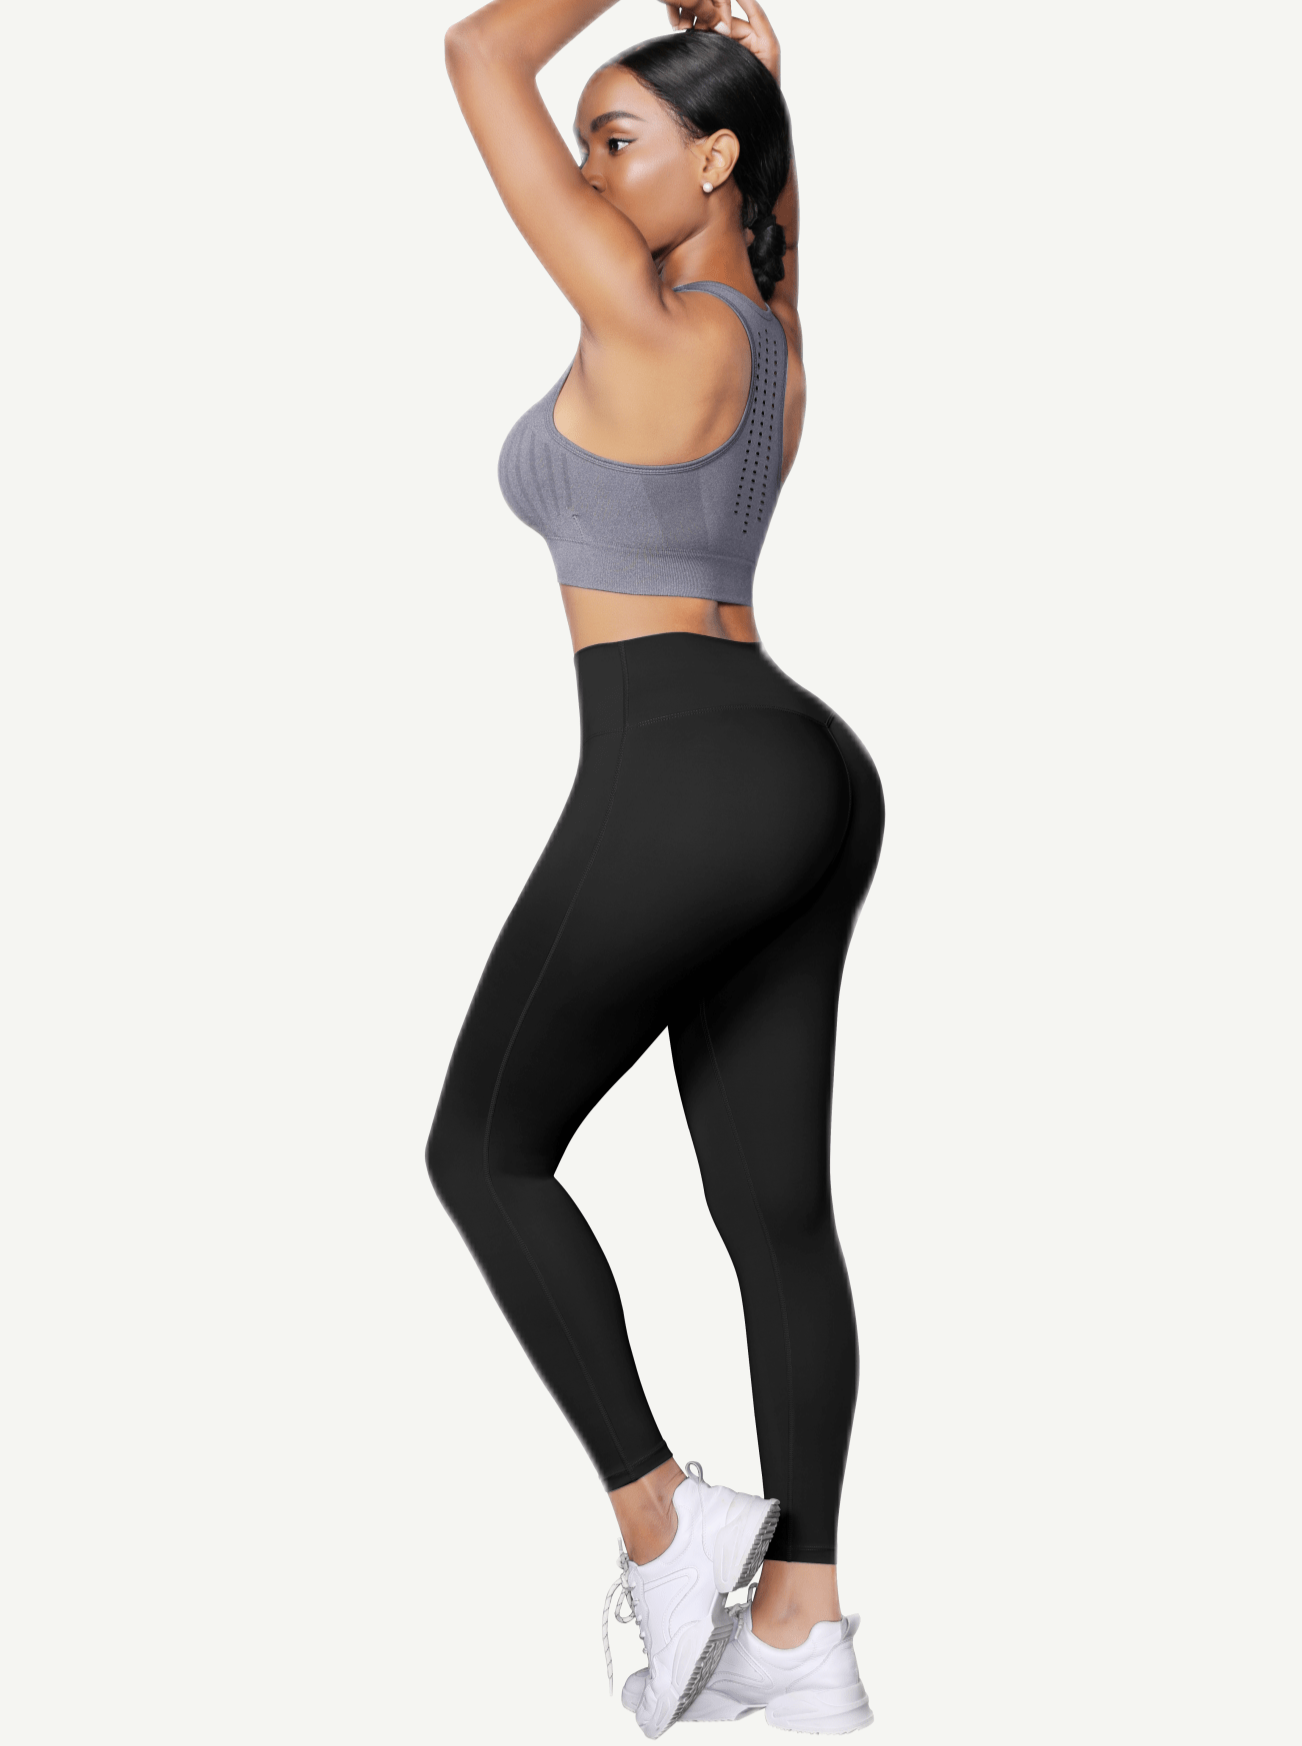 Wholesale Women's Fitness Workout Yoga Pants